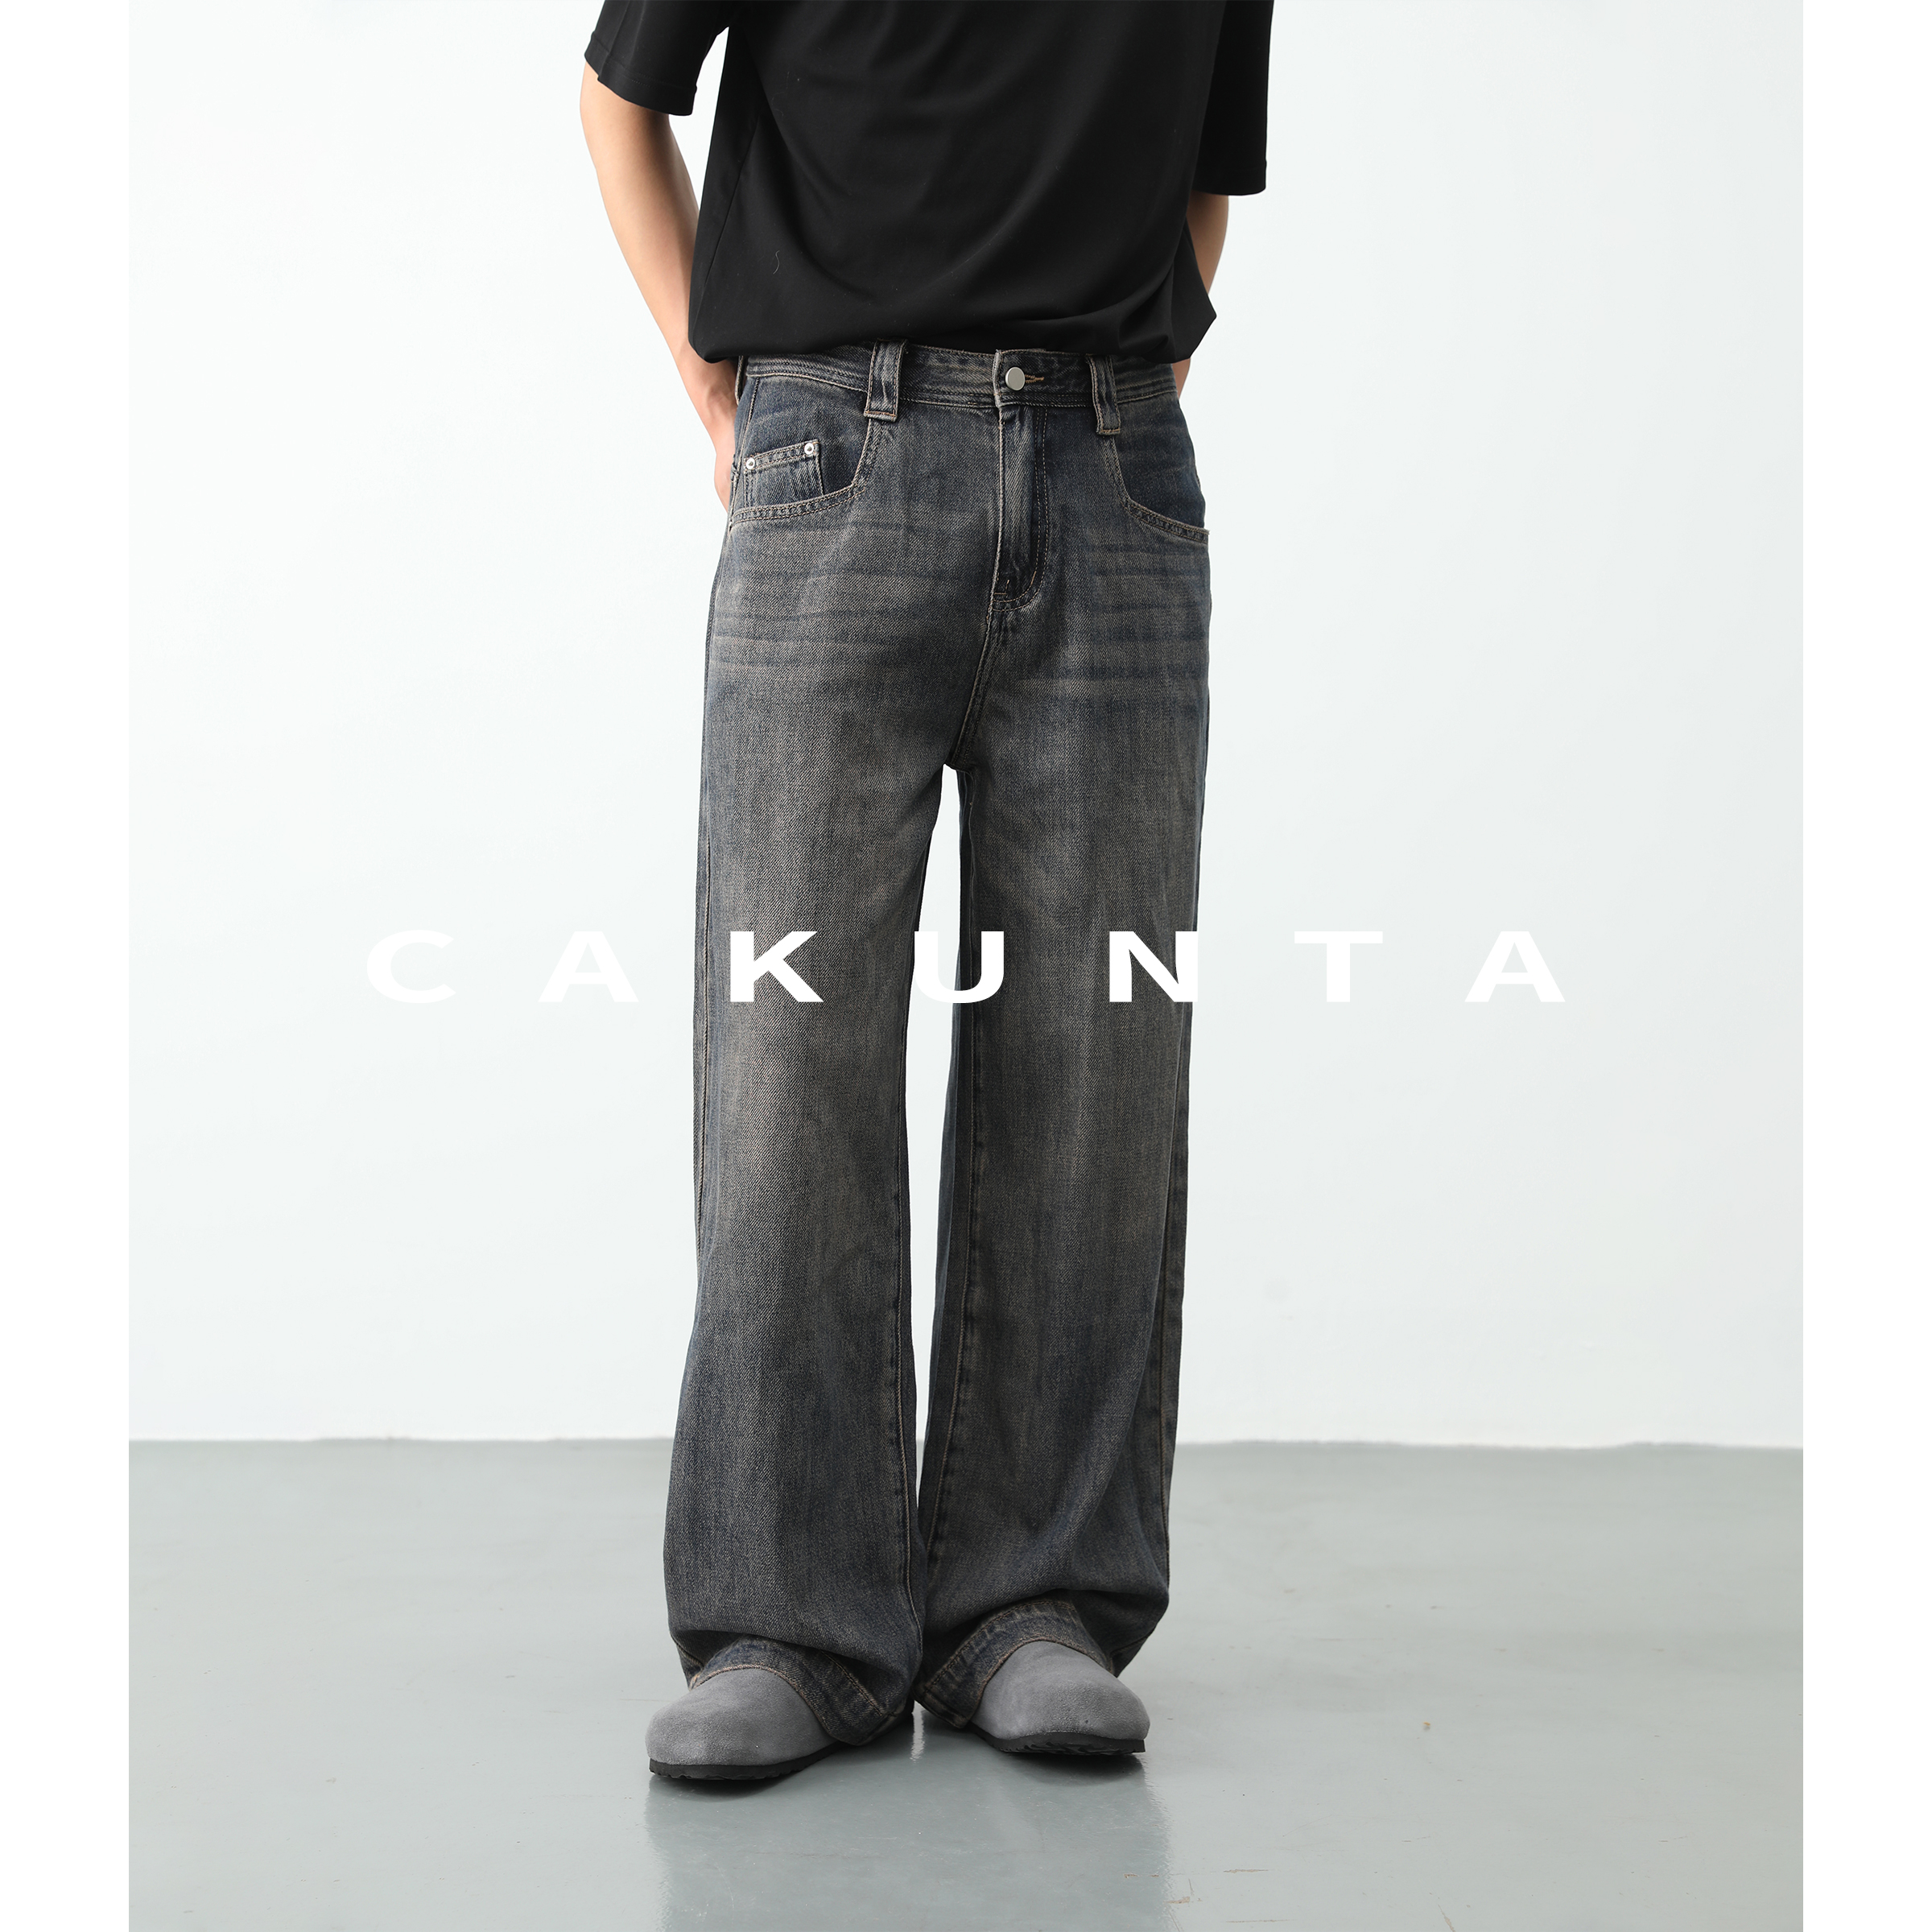 CAKUNTA 比运动裤还舒服的一款 莱赛尔纤维柔软牛仔裤 cleanfit裤